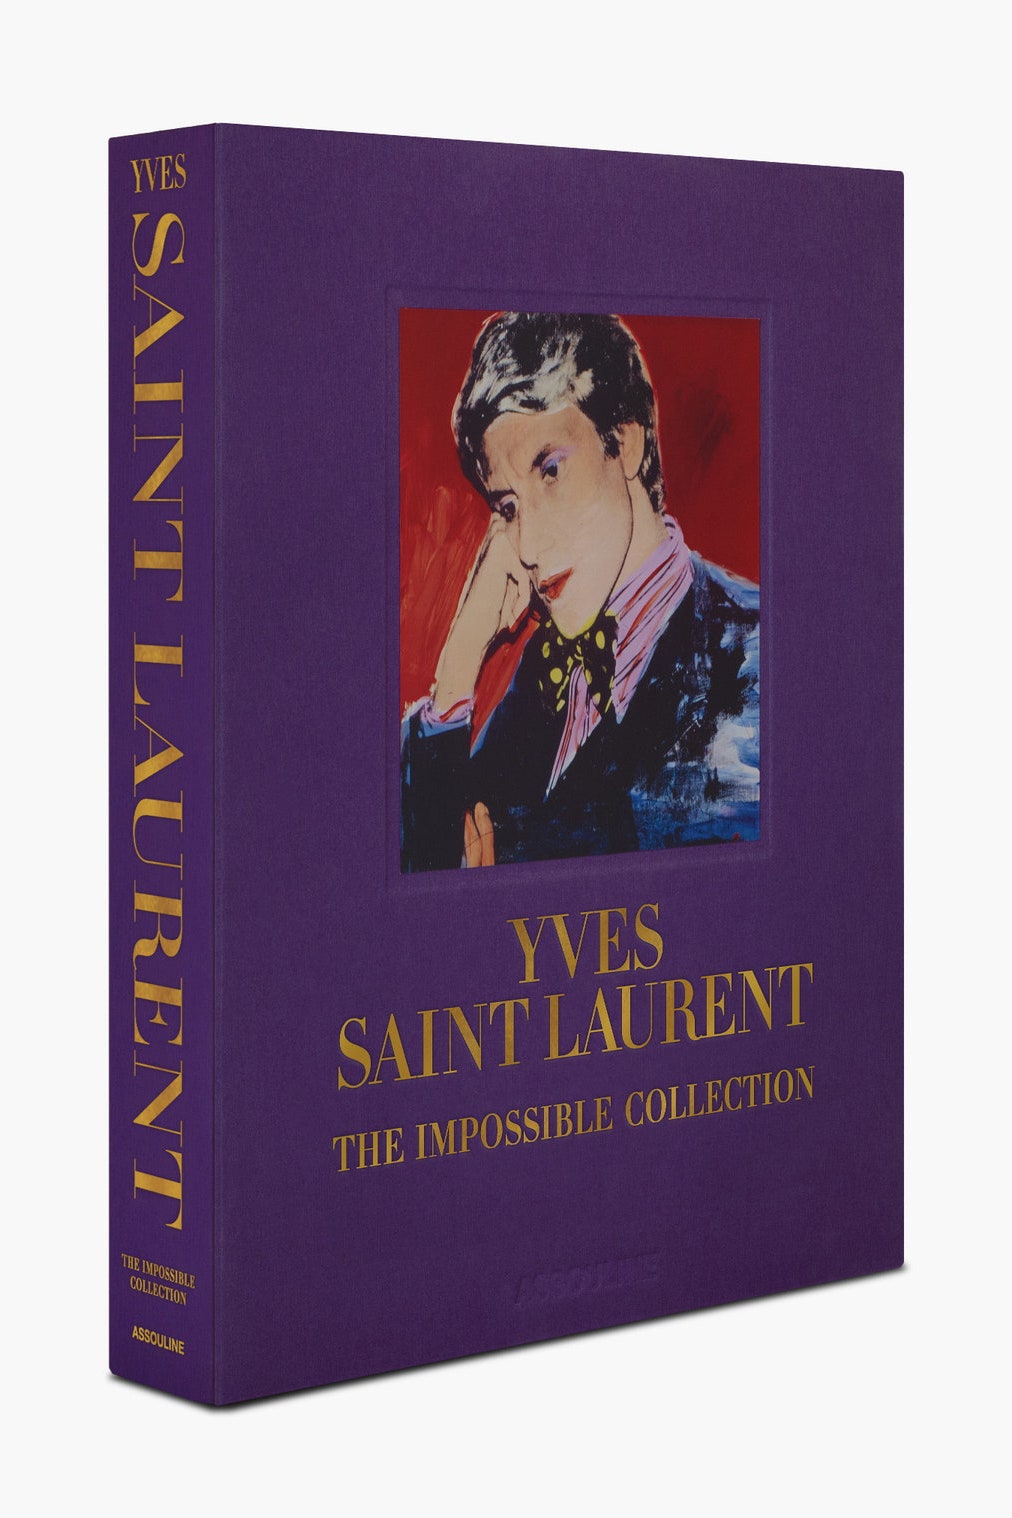 Yves Saint Laurent The Impossible Collection — что внутри новой книги Assouline